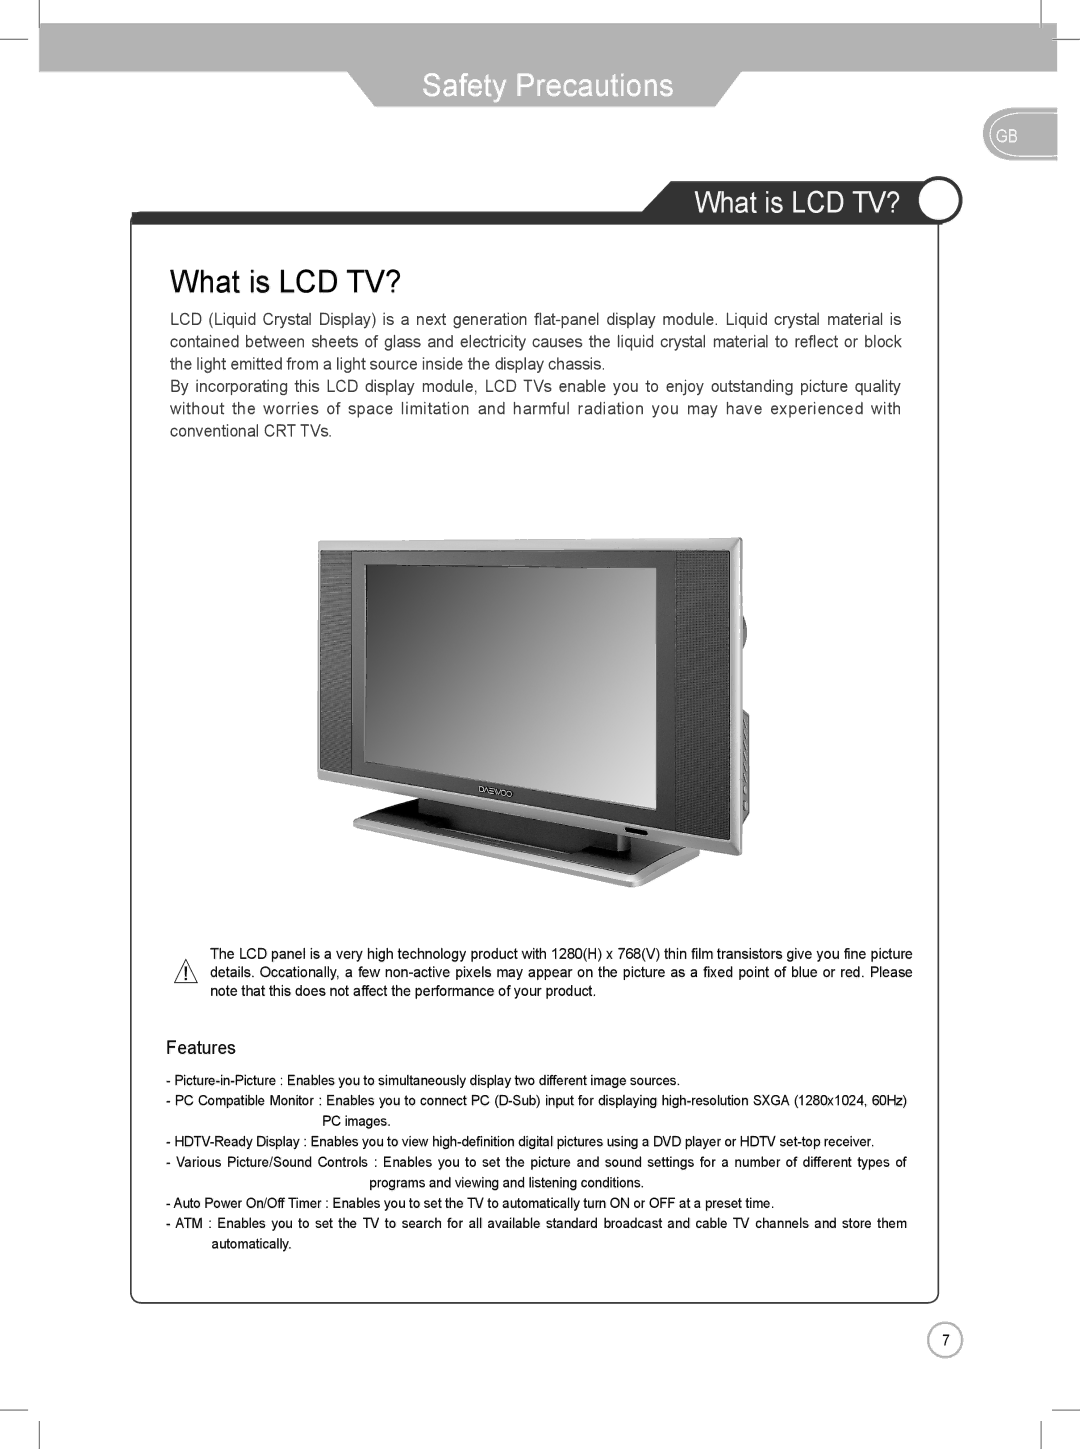 Daewoo DLP-2622, DLP-3022 user manual What is LCD TV? 